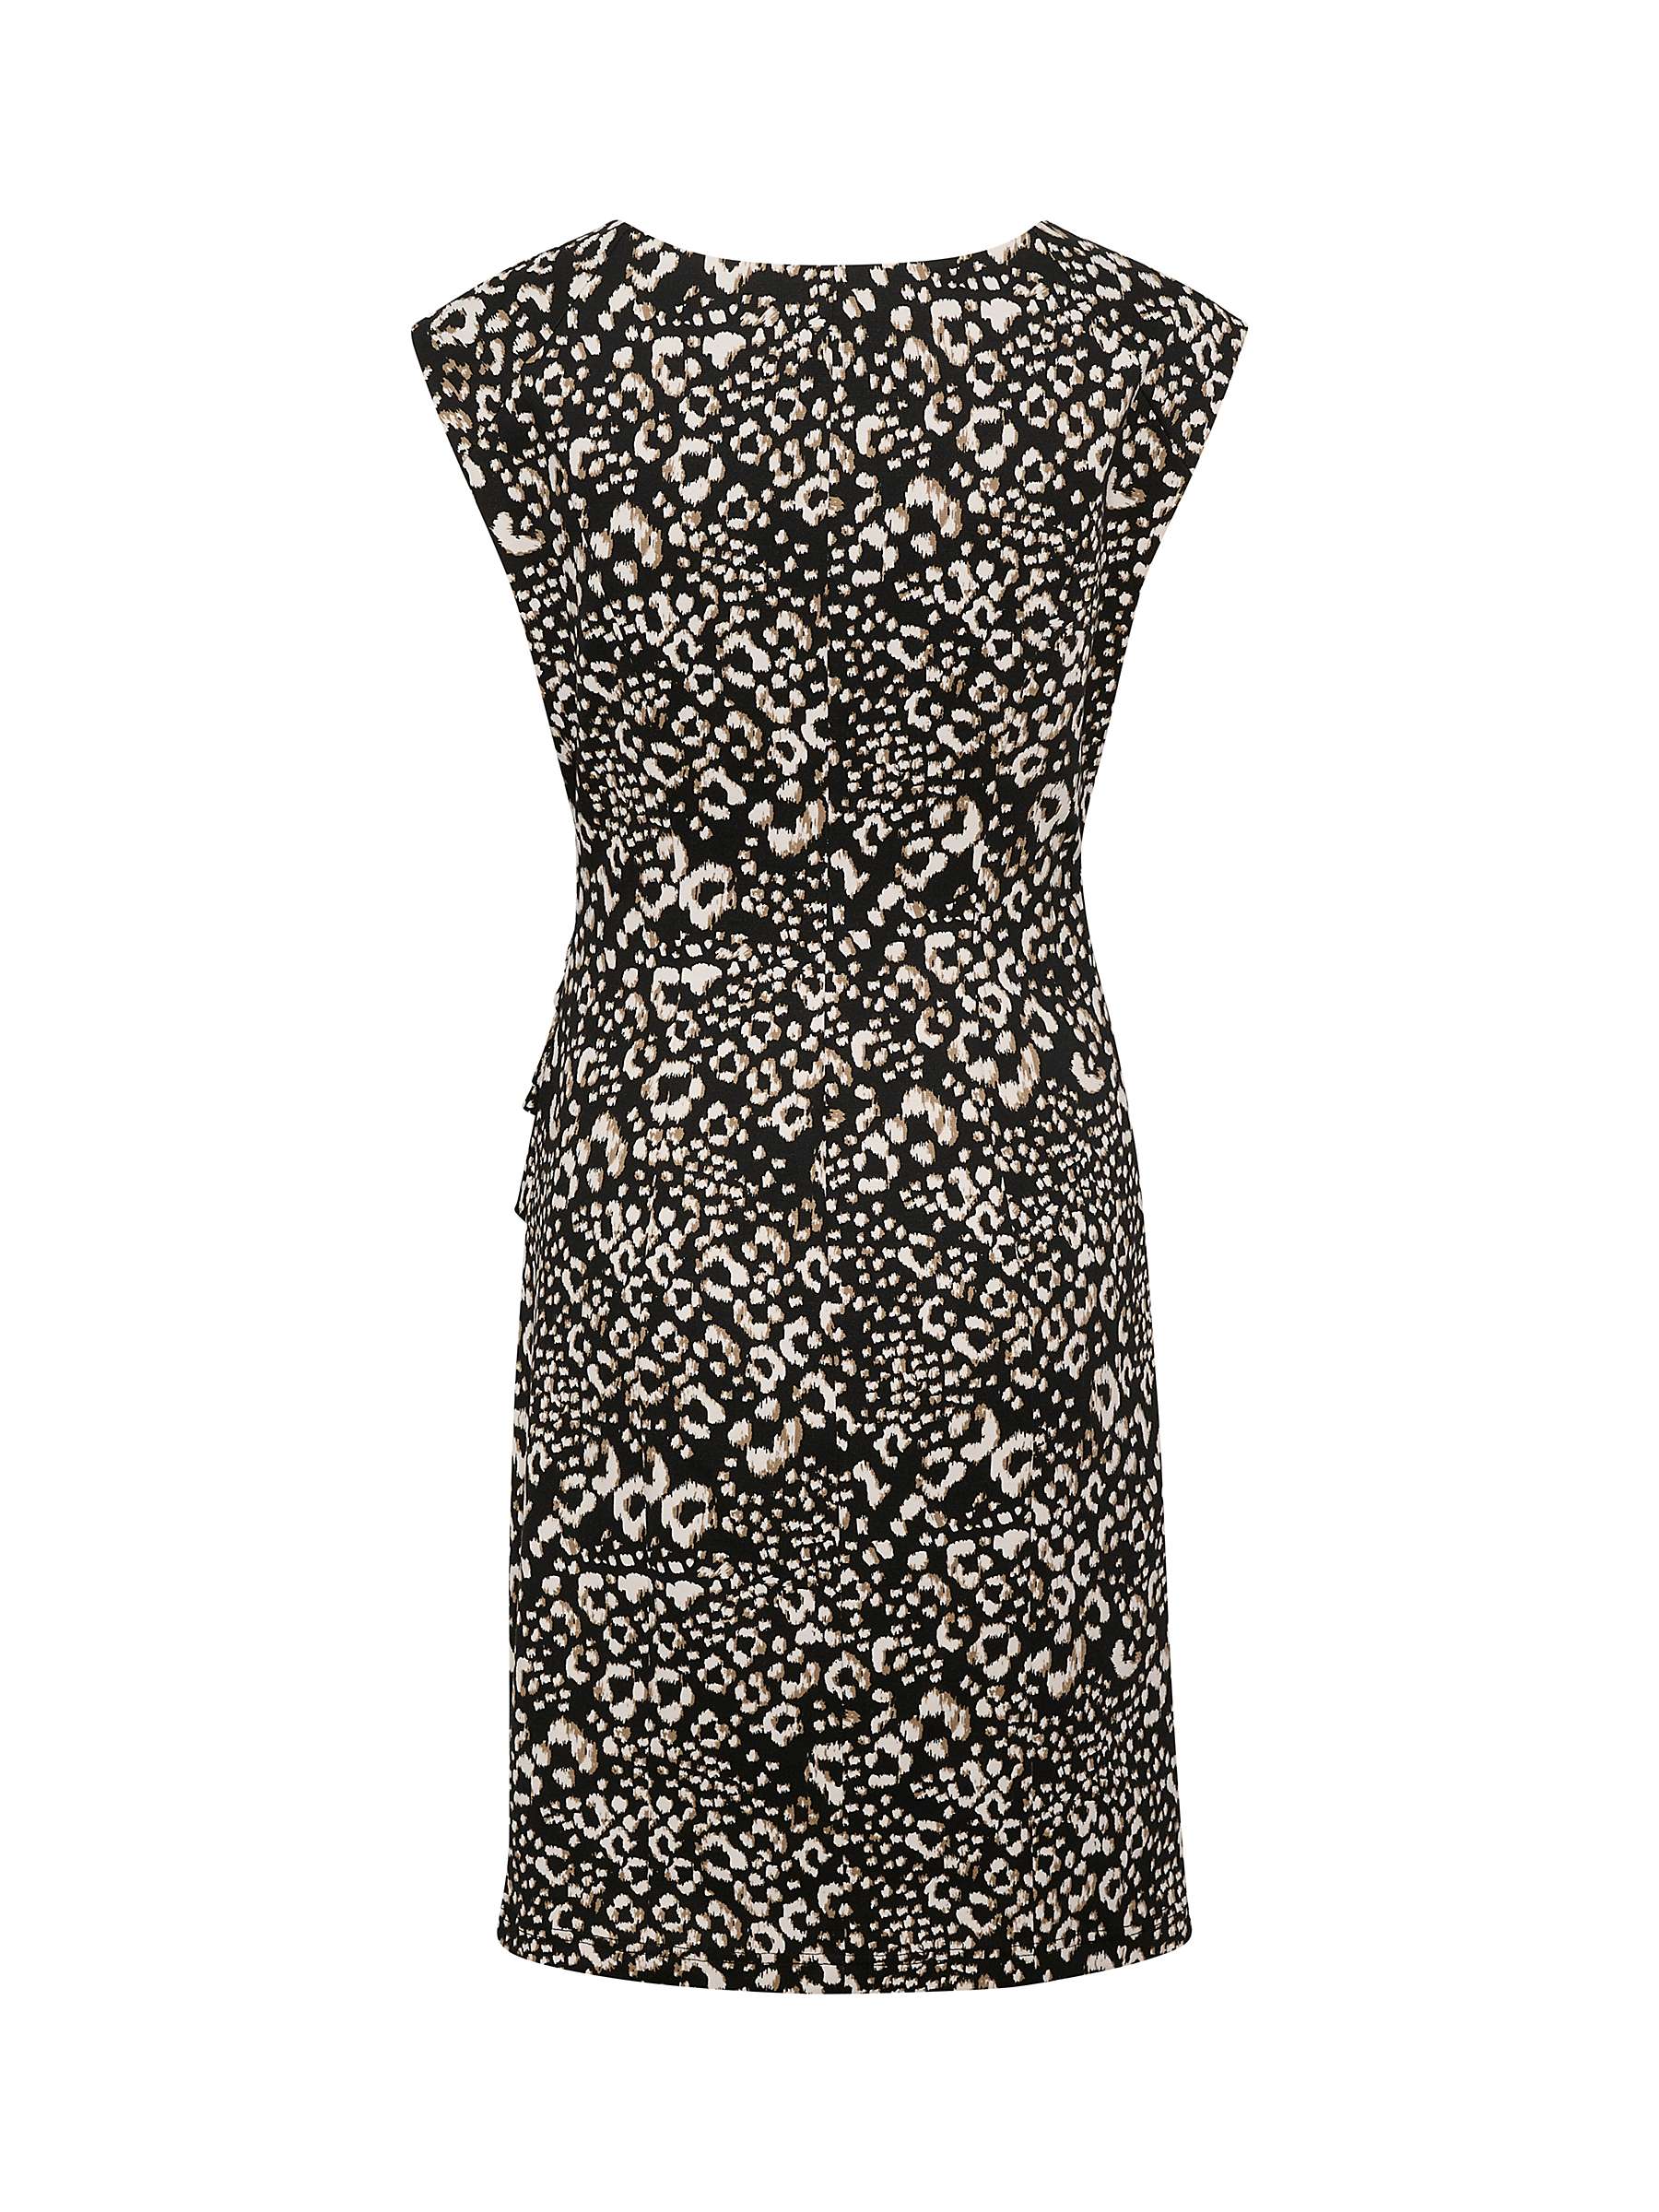 Buy KAFFE Mian India Cocktail Mini Dress, Black/Chalk Online at johnlewis.com